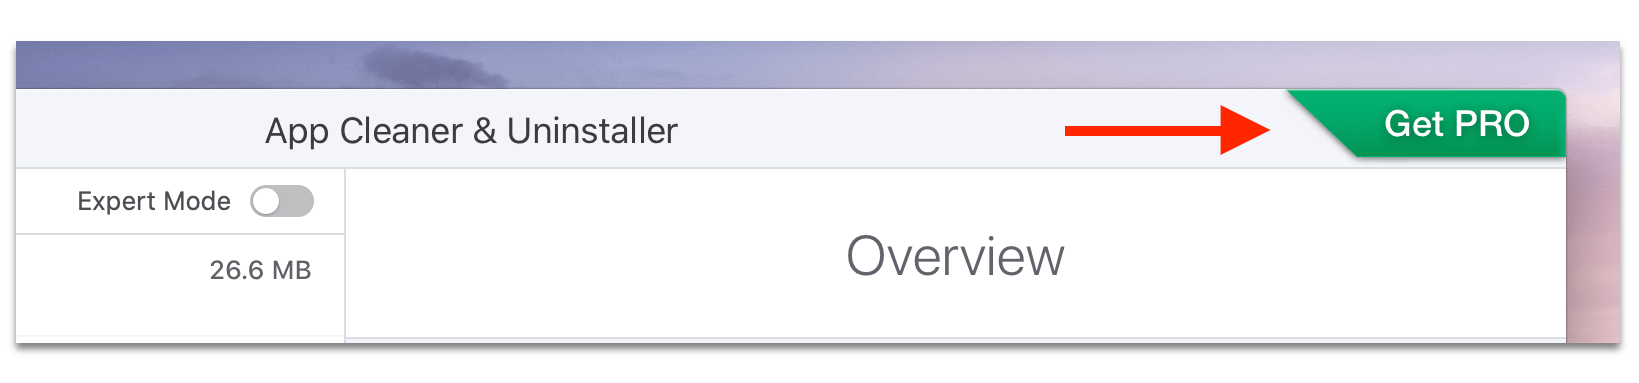 Get Pro button in App Cleaner Uninstaller screen